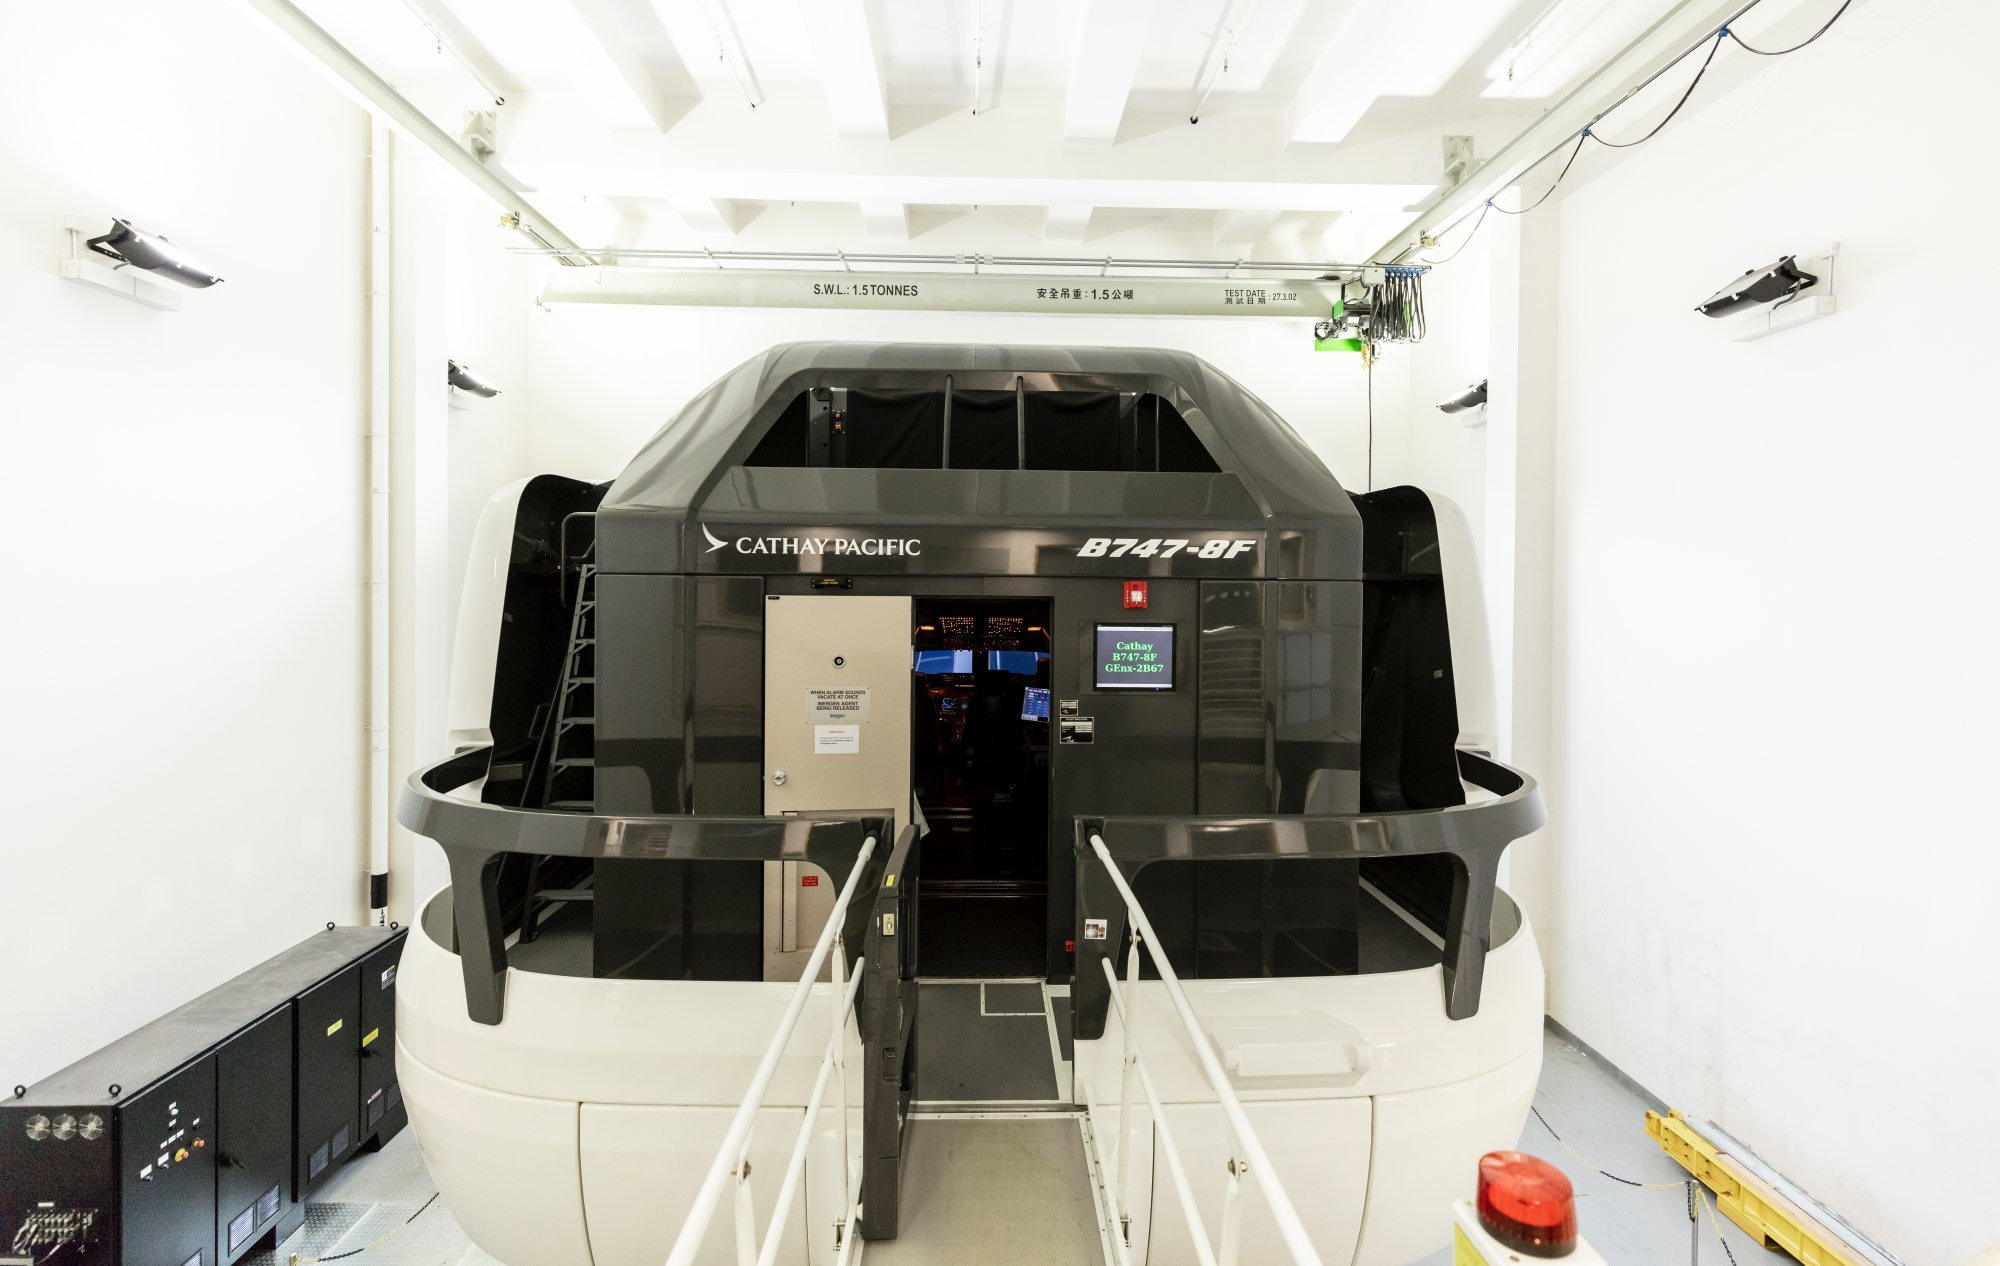 Cathay Pacific flight simulator